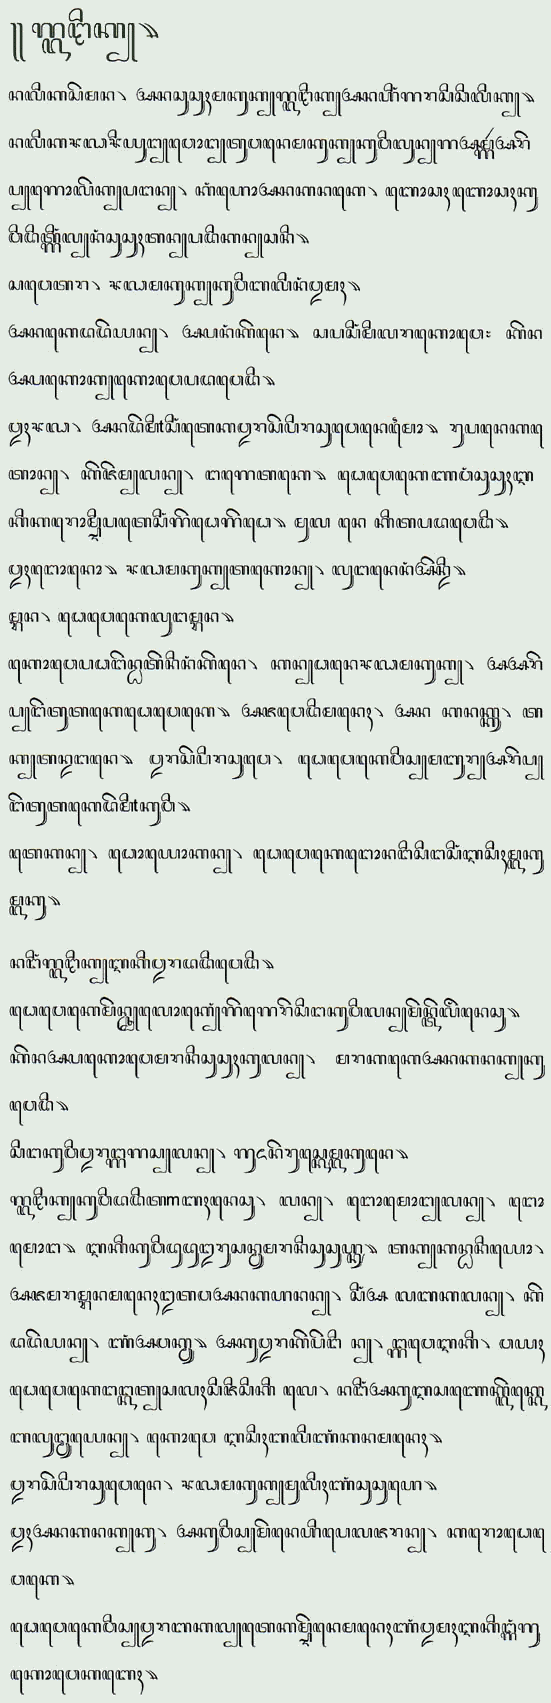 Text in Javanese (Carakan) Script